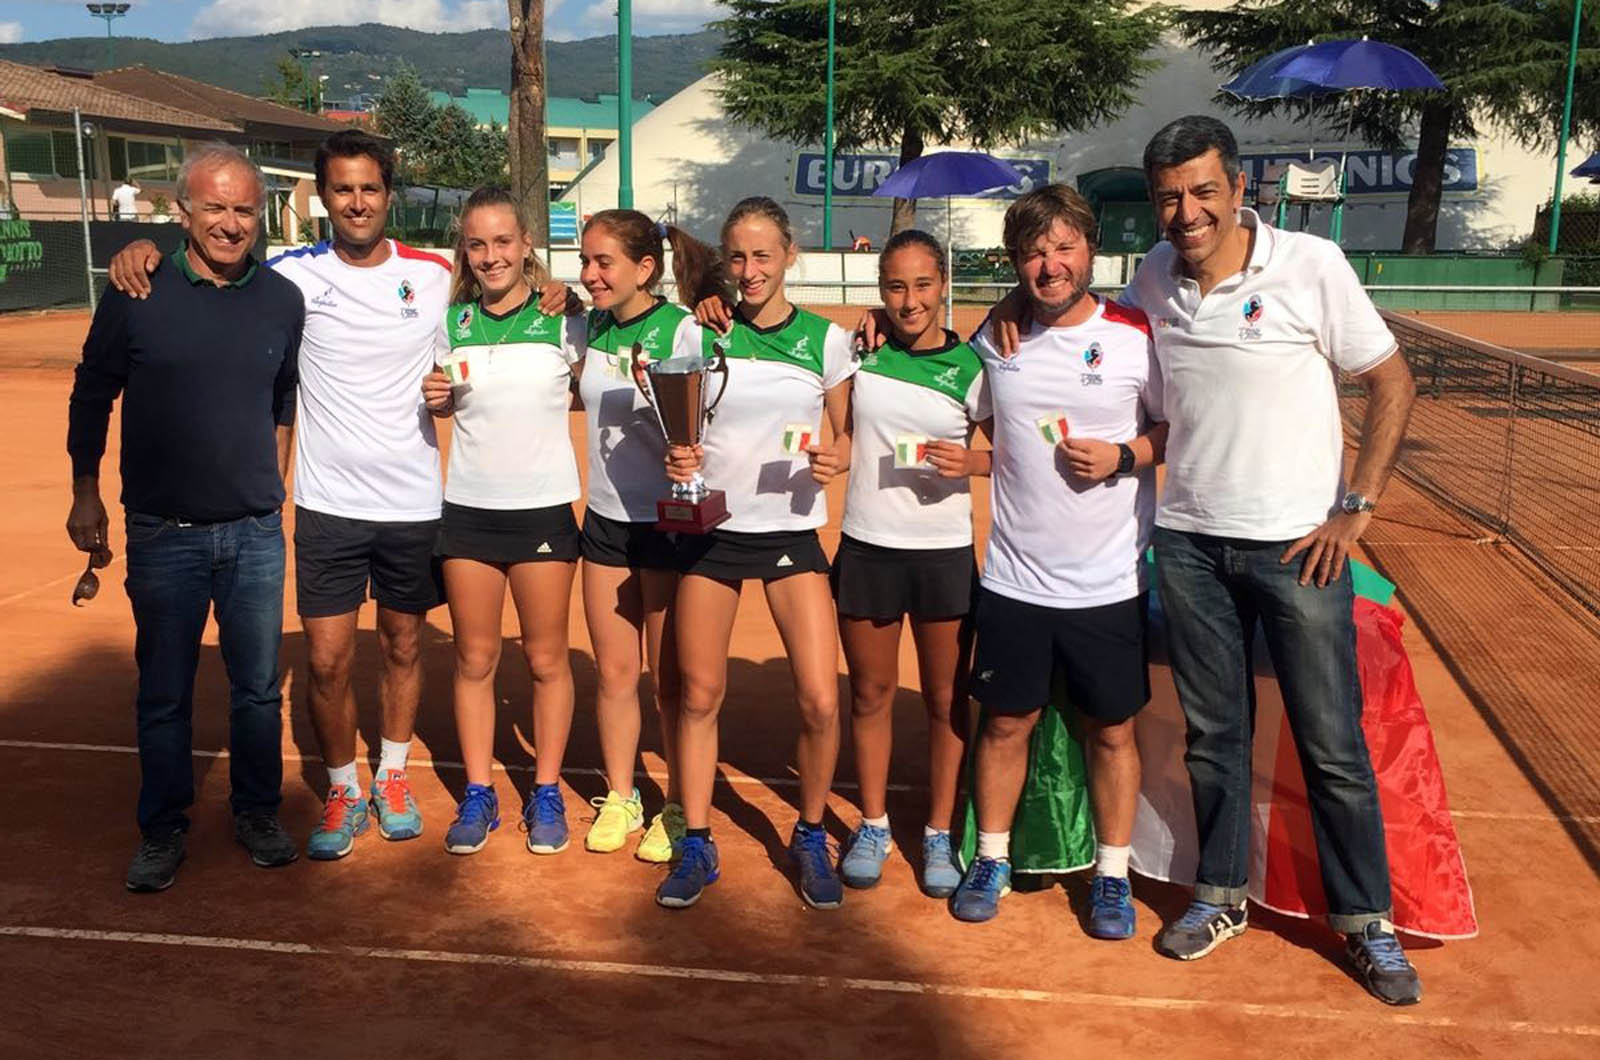 Tennis Club Giotto Campione d’Italia Under 14 femminile